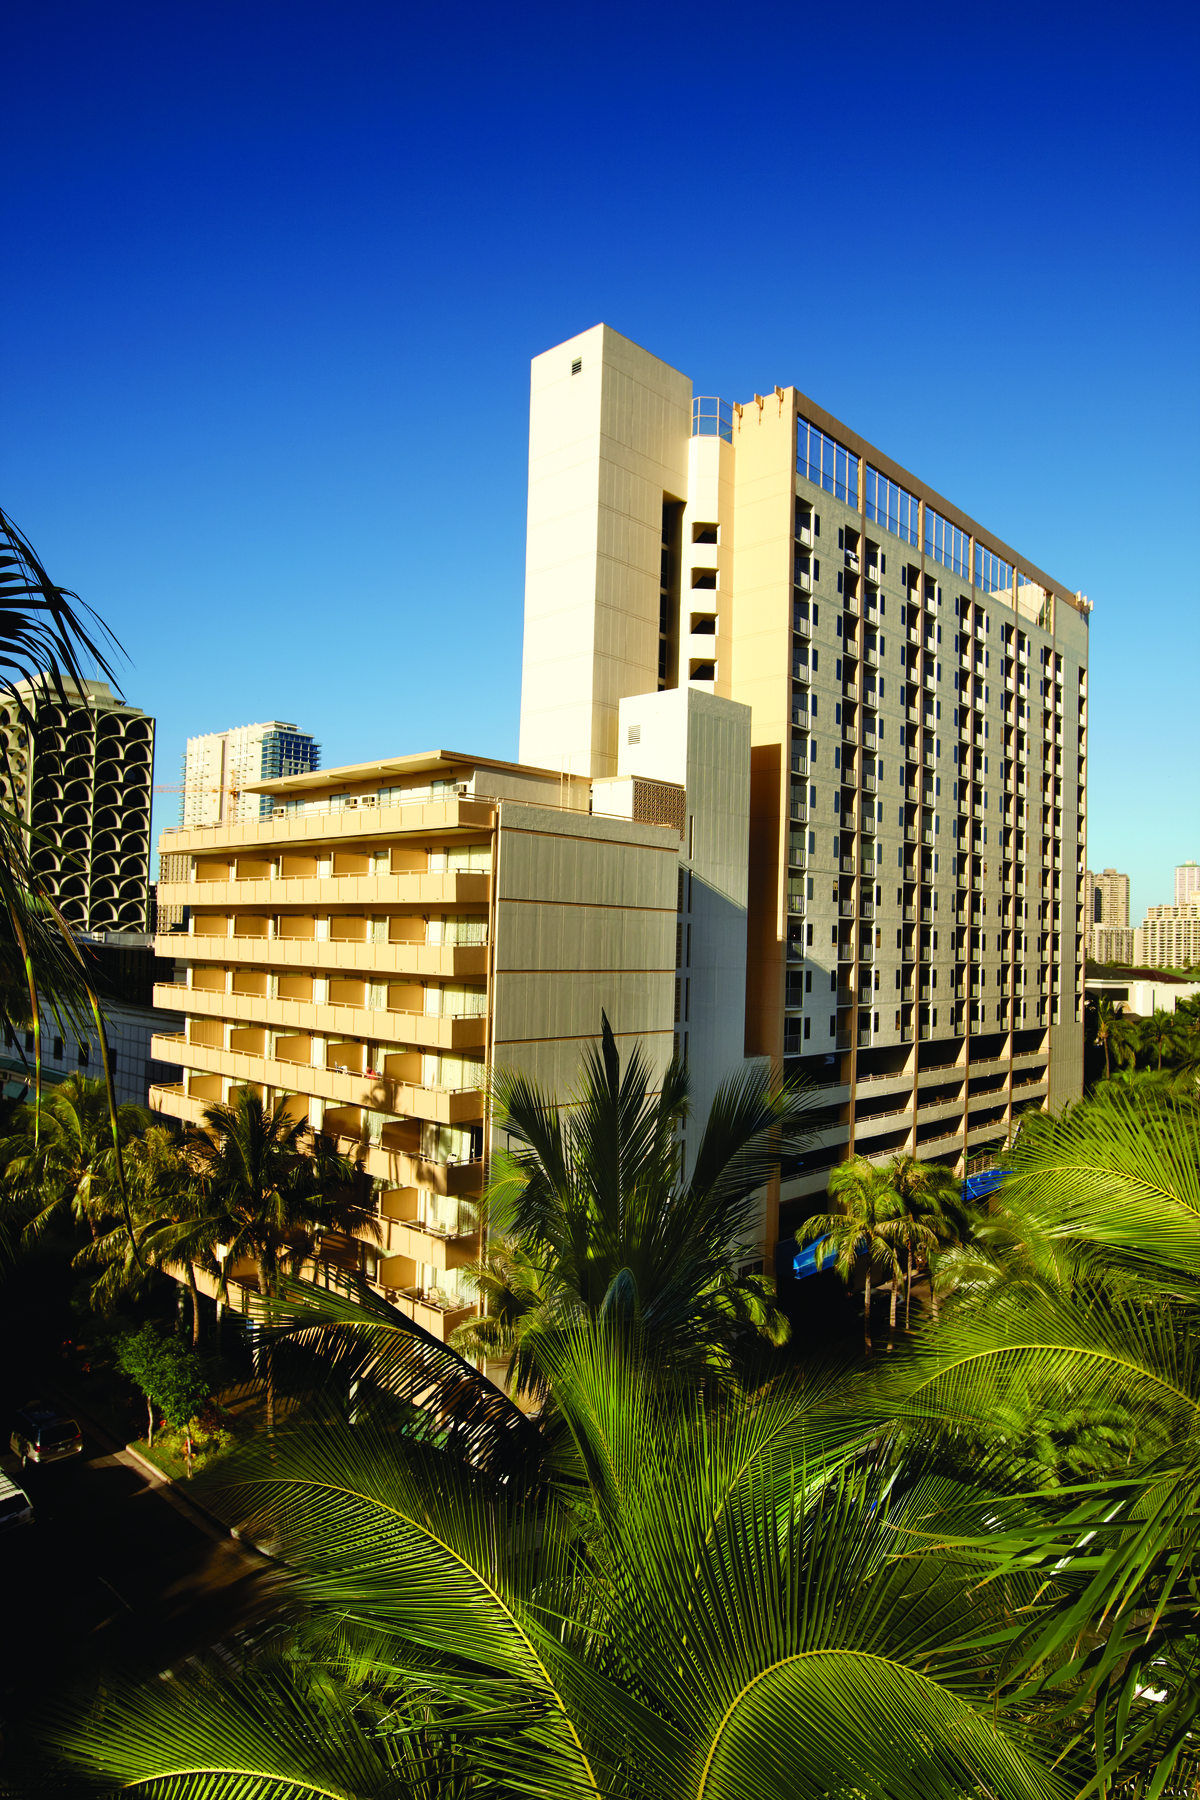 OHANA® Waikiki Malia by Outrigger® – Outrigger Hotels and Resorts